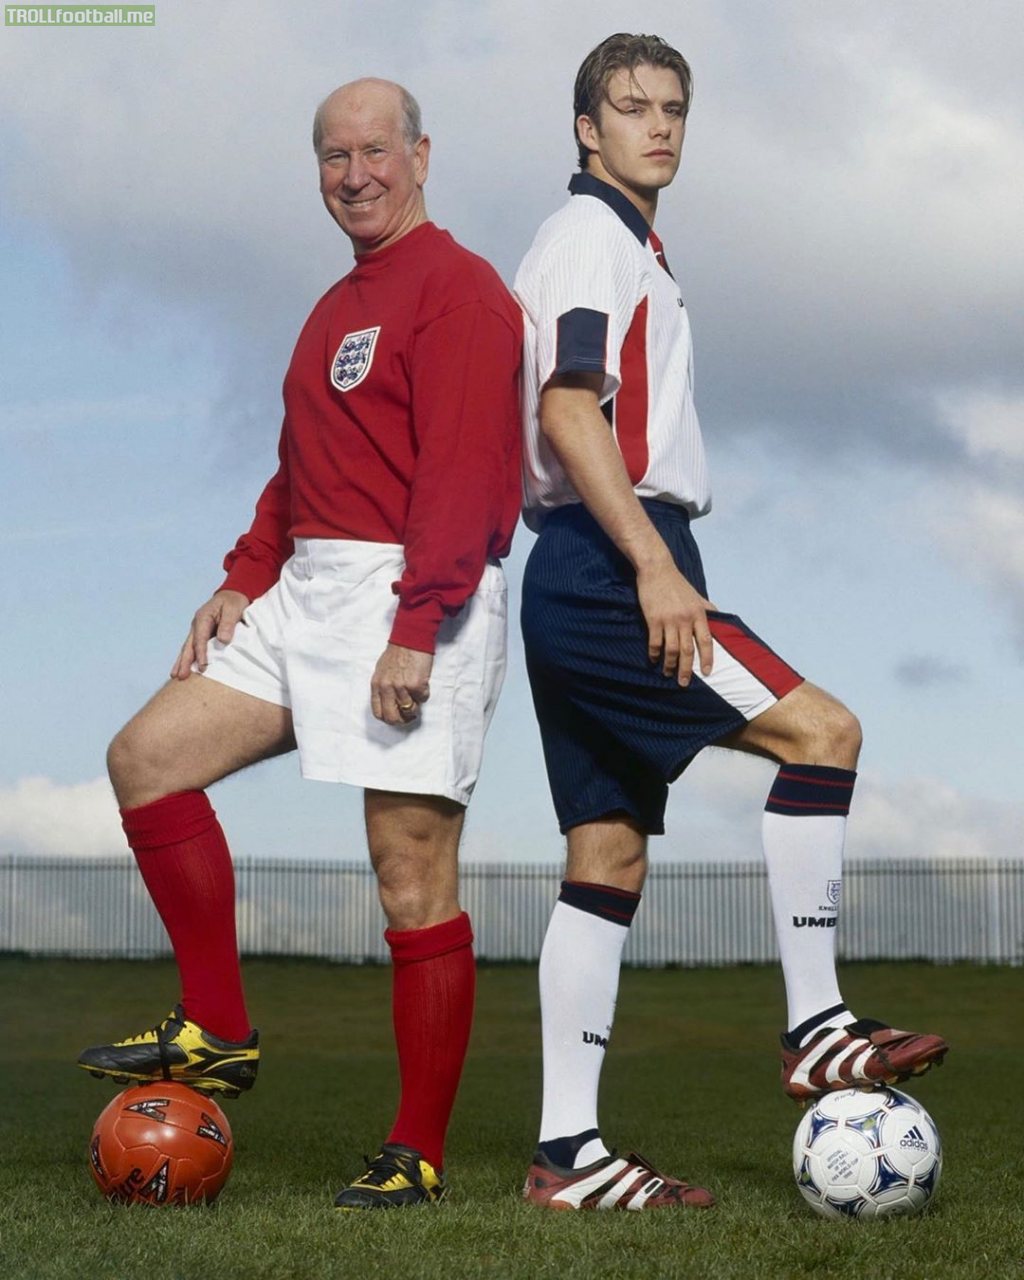 Sir Bobby Charlton and David Beckham from 1998 - Troll Football